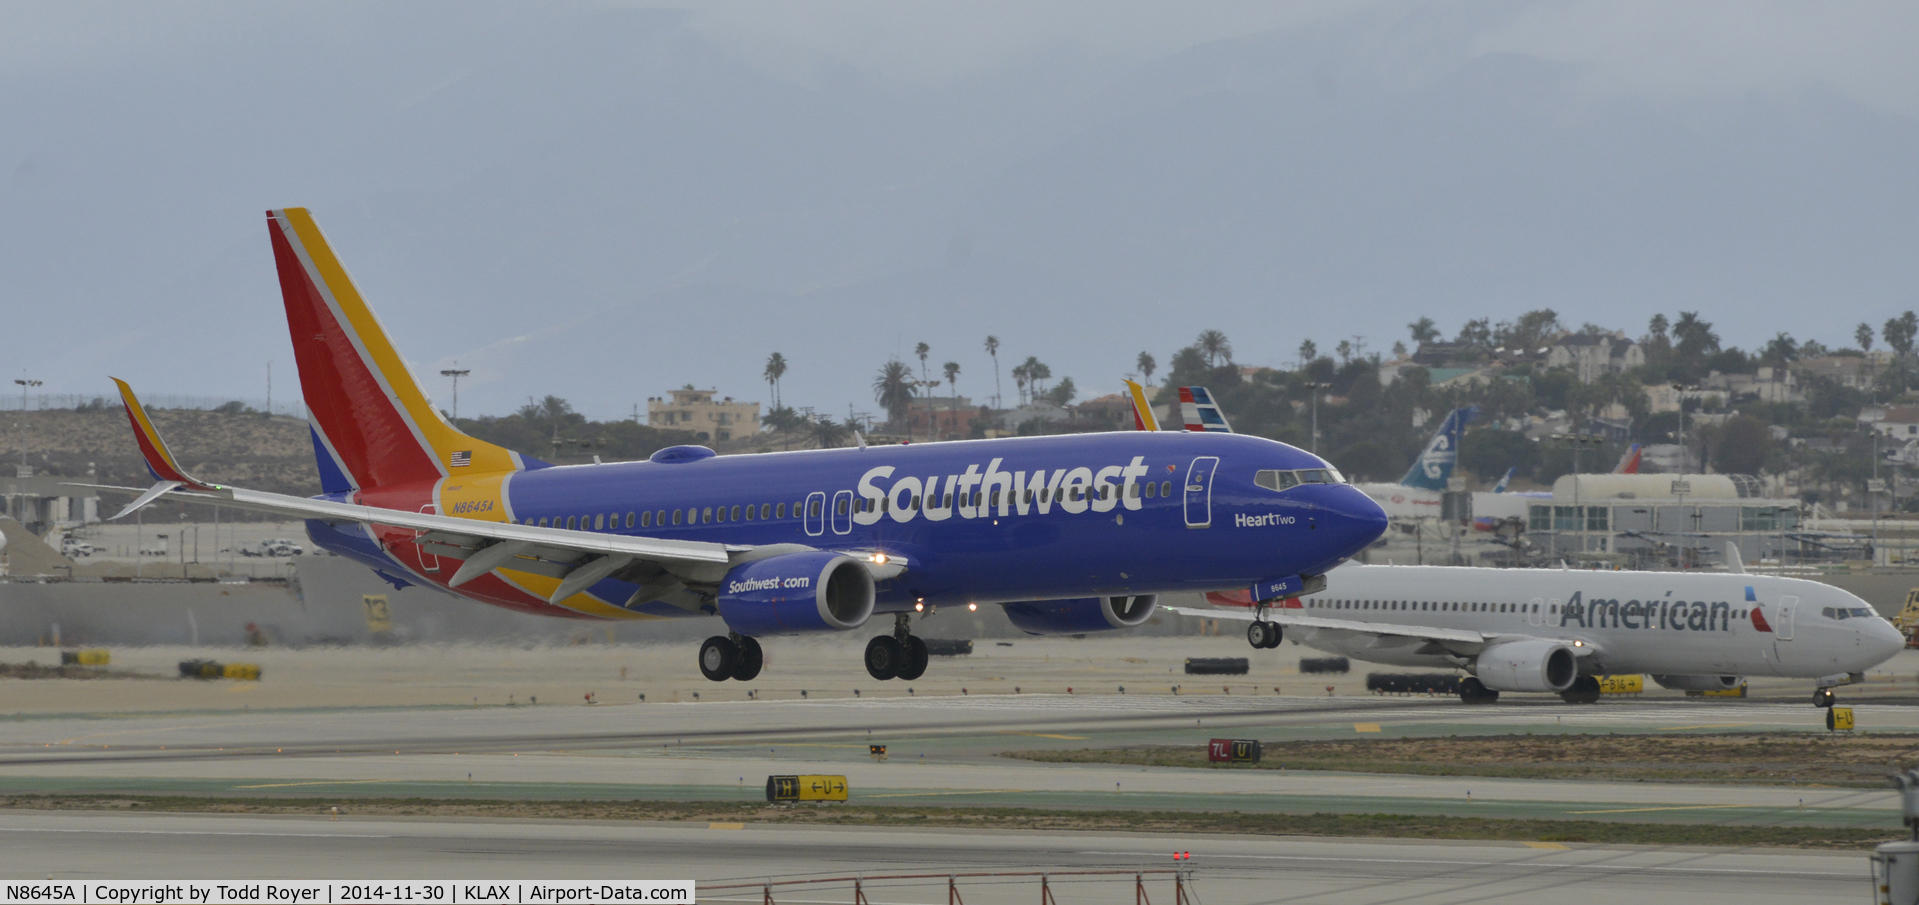 N8645A, 2014 Boeing 737-8H4 C/N 36907, Landing at LAX on 7R